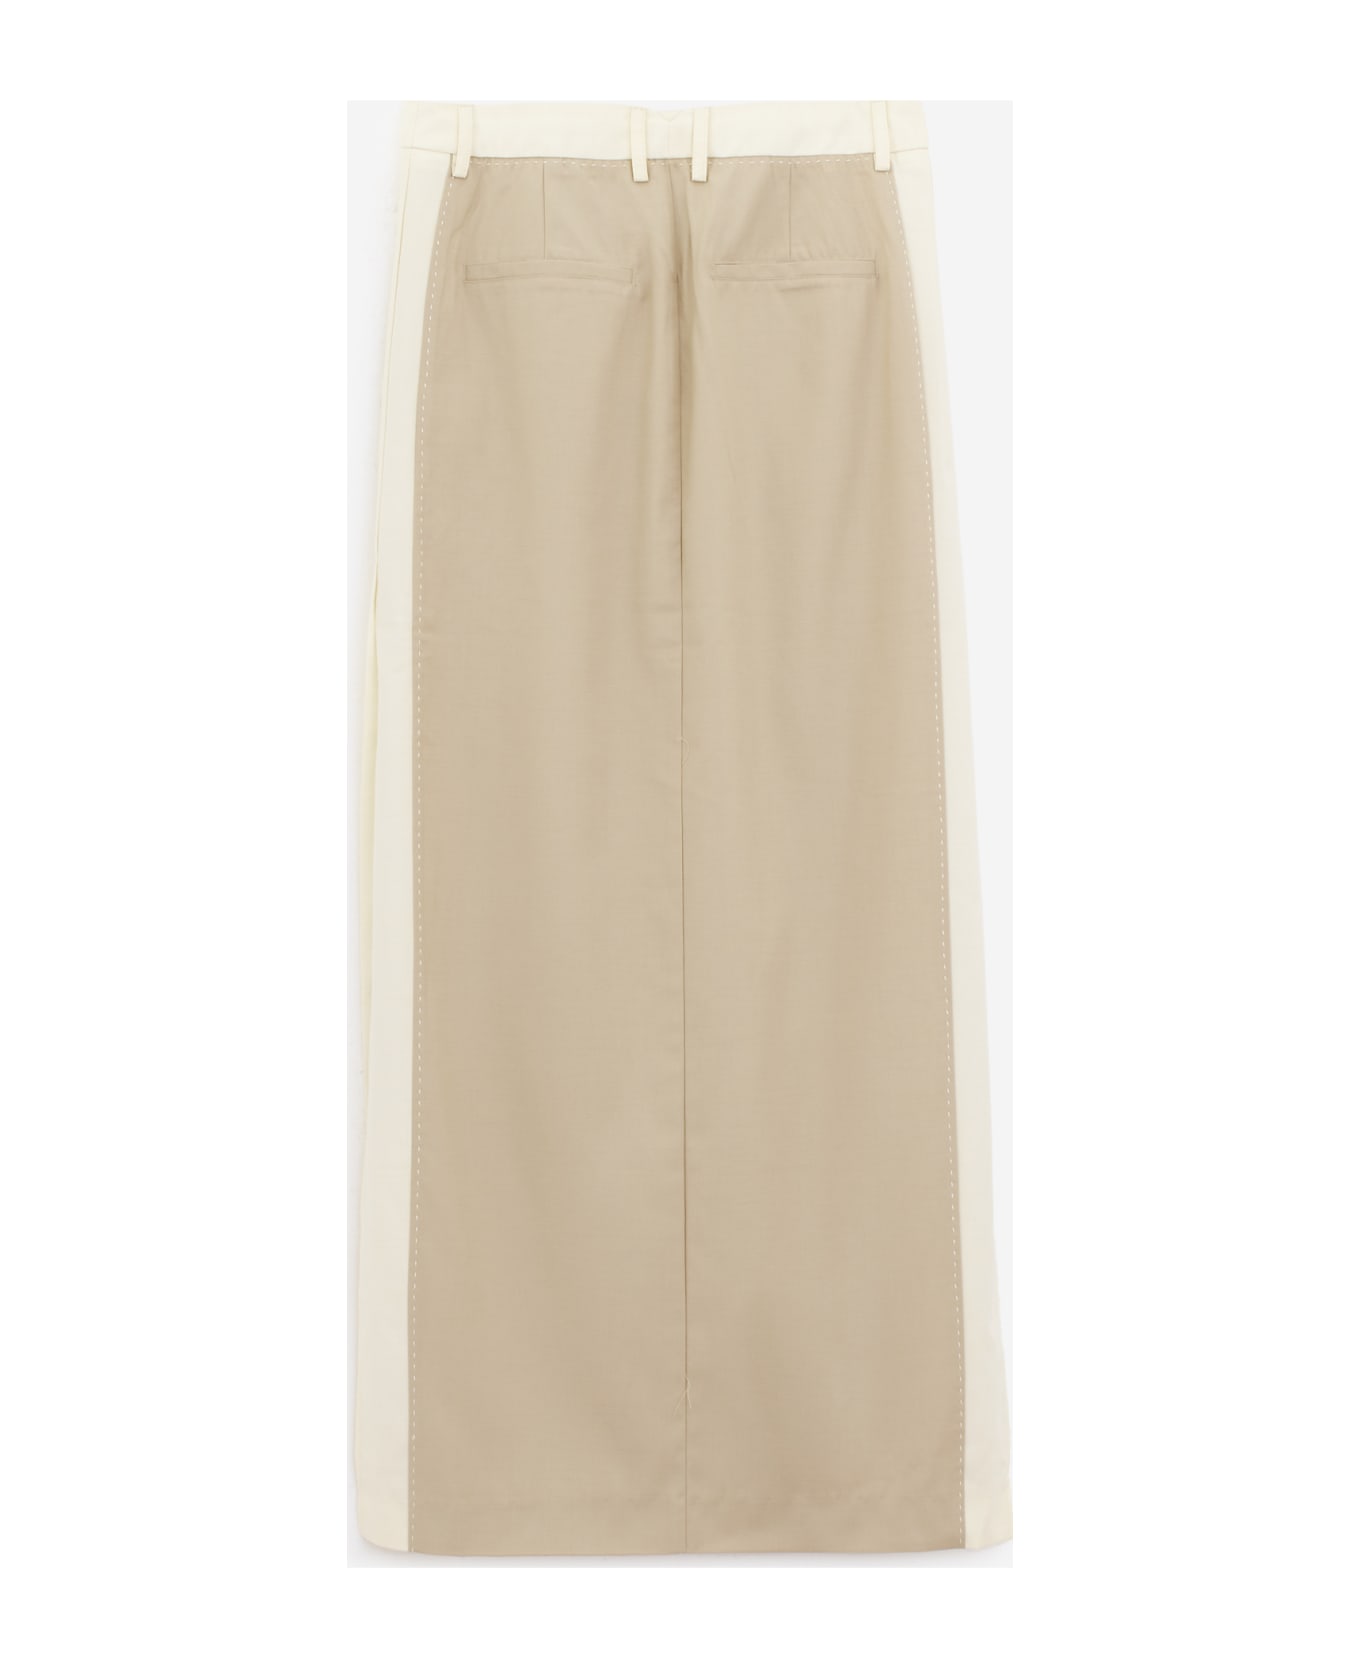 REMAIN Birger Christensen Two Color Maxi Skirt - beige